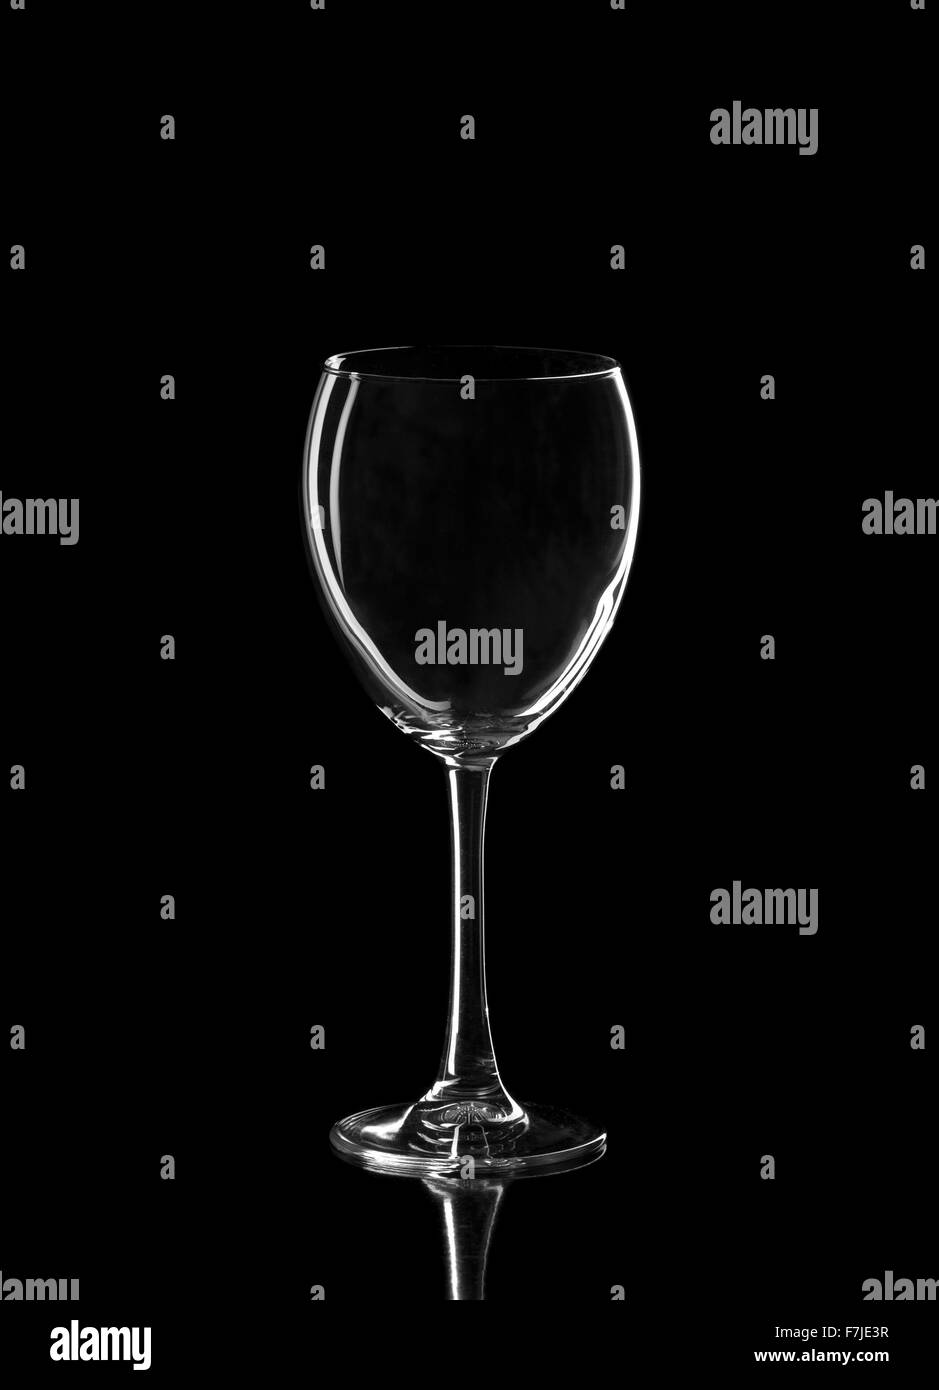 https://c8.alamy.com/comp/F7JE3R/an-empty-glass-of-wine-isolate-on-a-black-background-F7JE3R.jpg